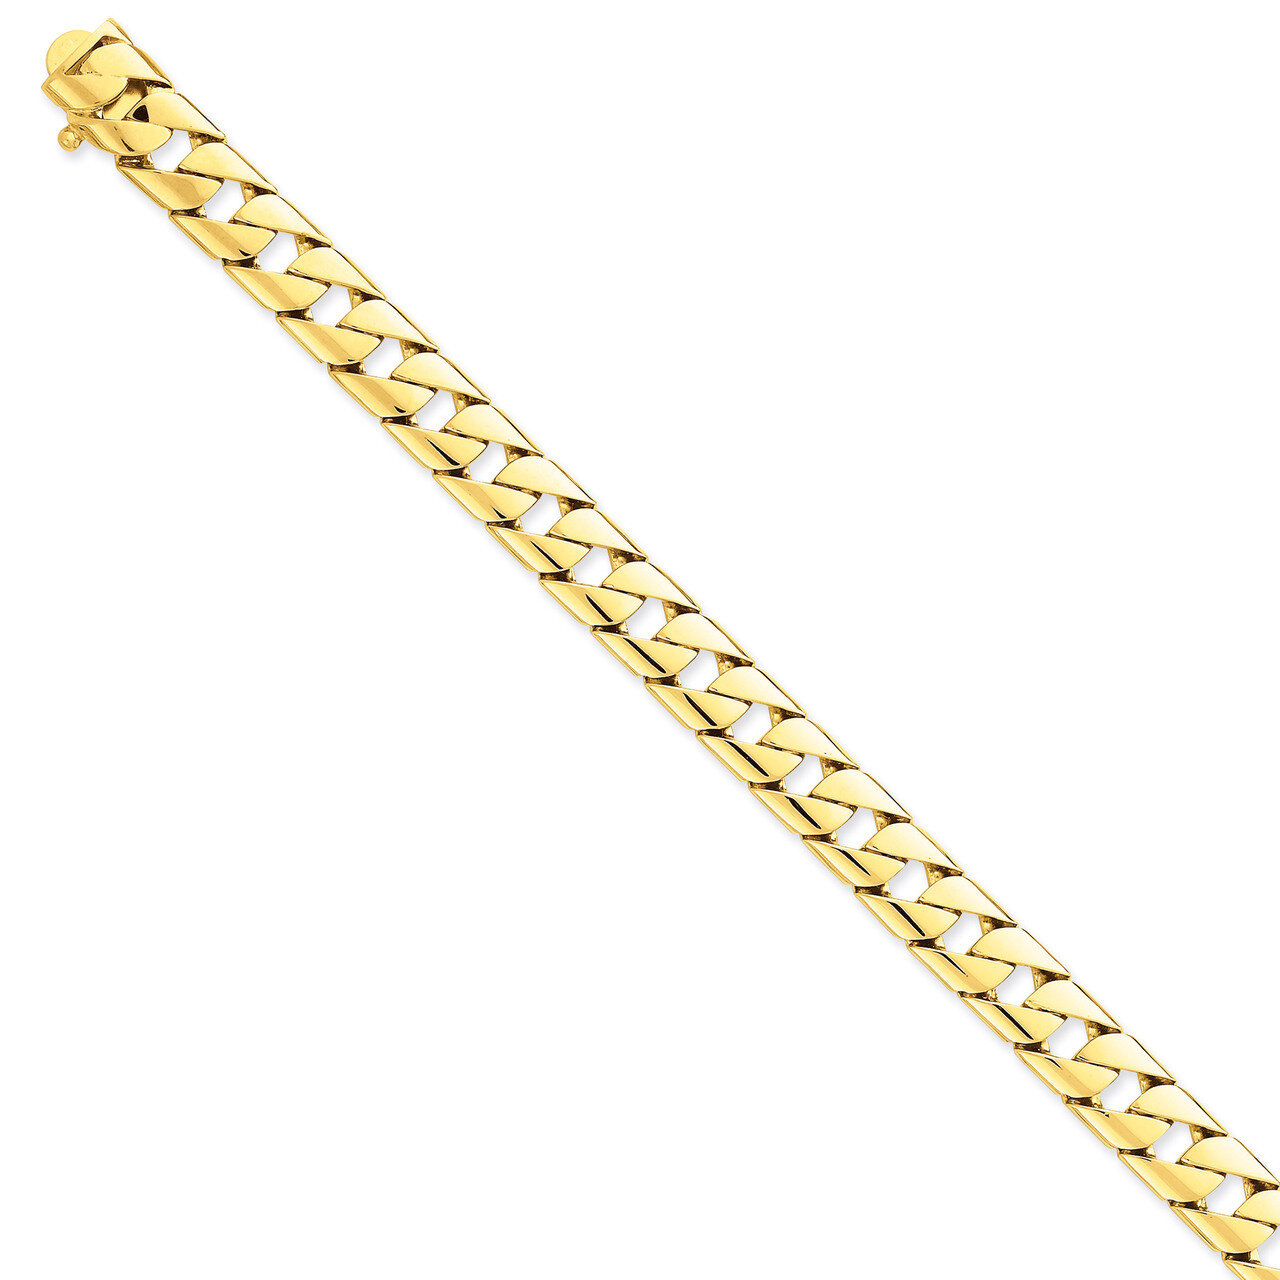 10mm Hand-Polished Fancy Link Chain 22 Inch 14k Gold LK141-22